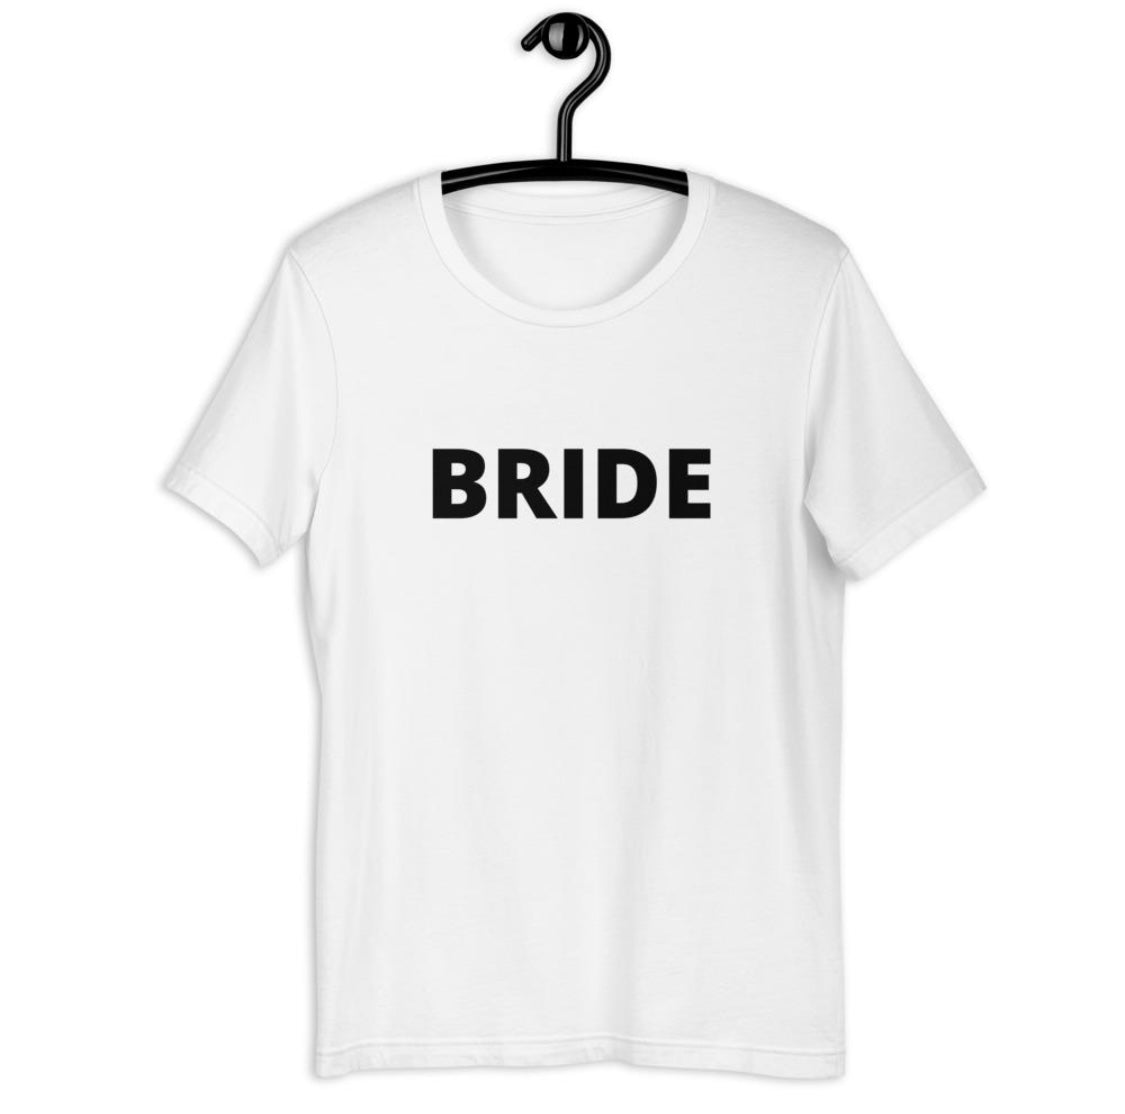 "BRIDE" Short-Sleeve Tee